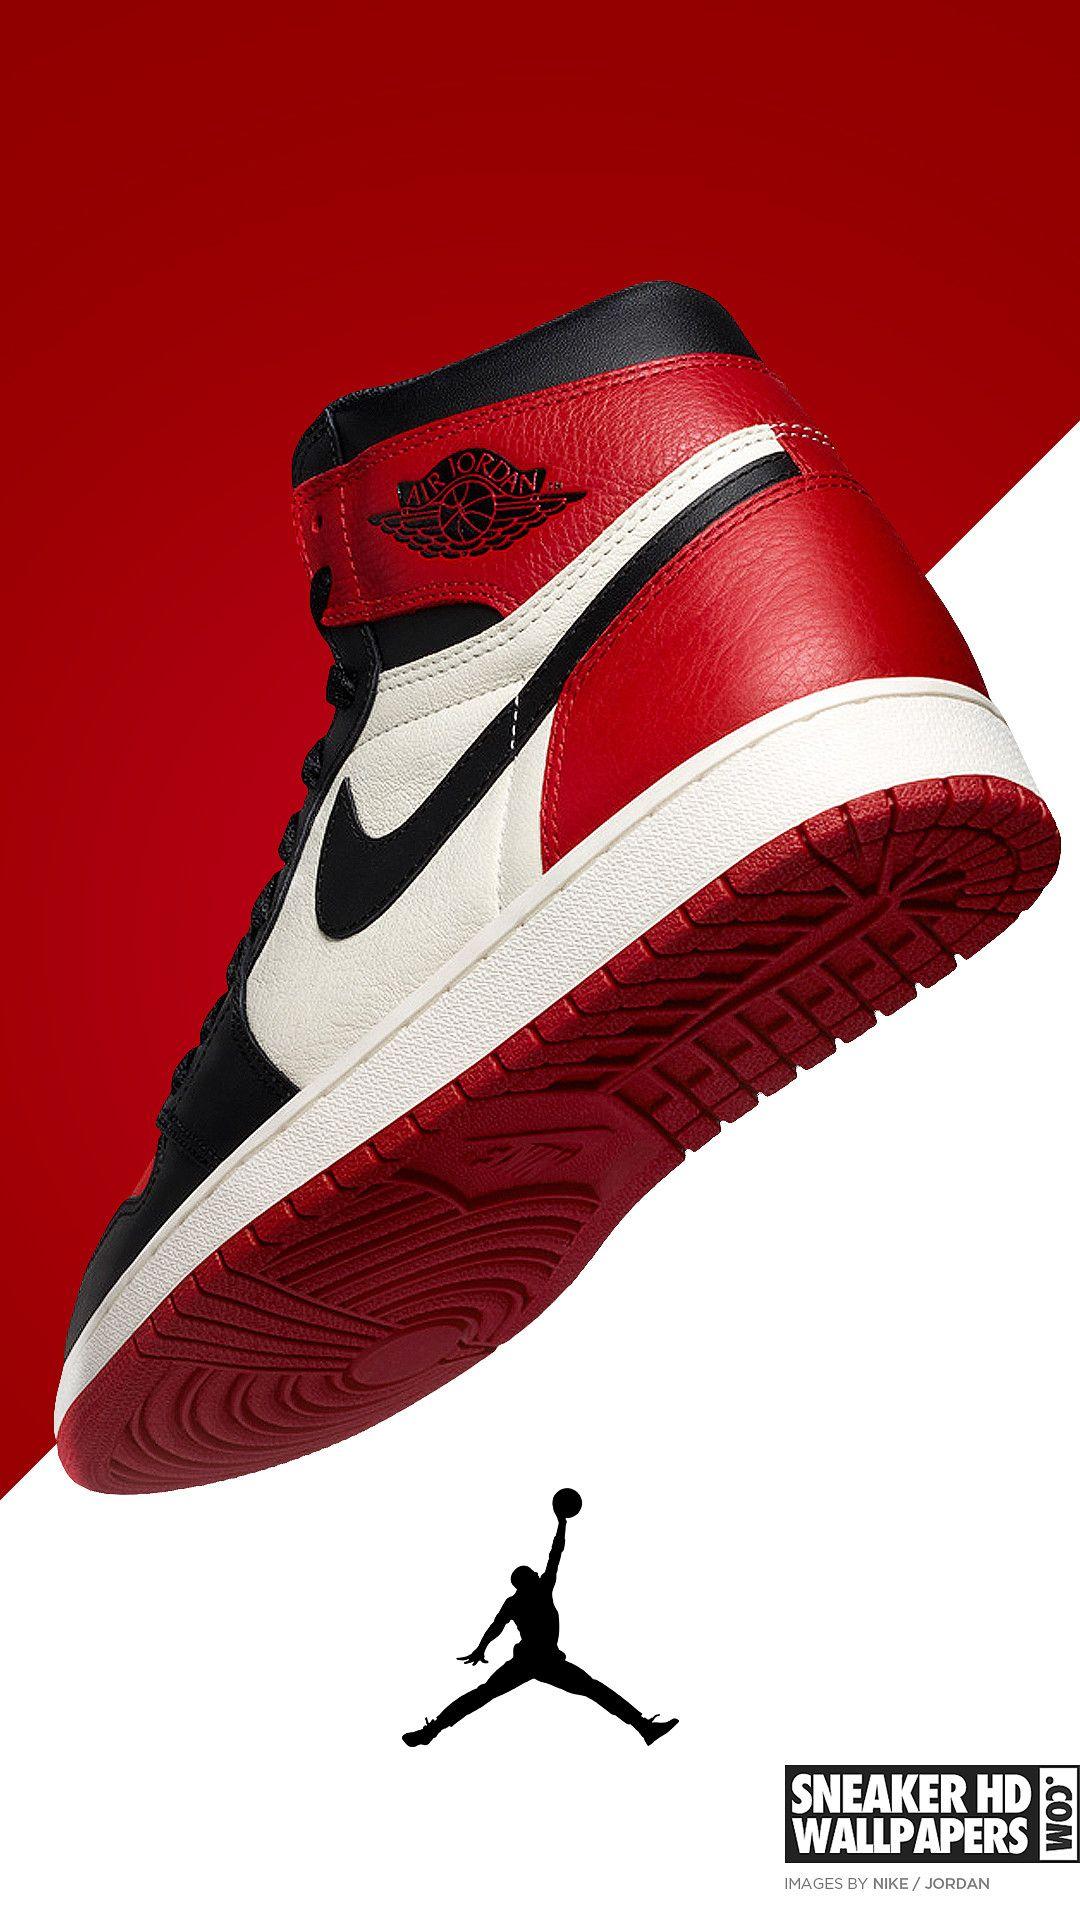 Permuta Abreviatura lector Nike Air Jordan Wallpapers - Wallpaper Cave